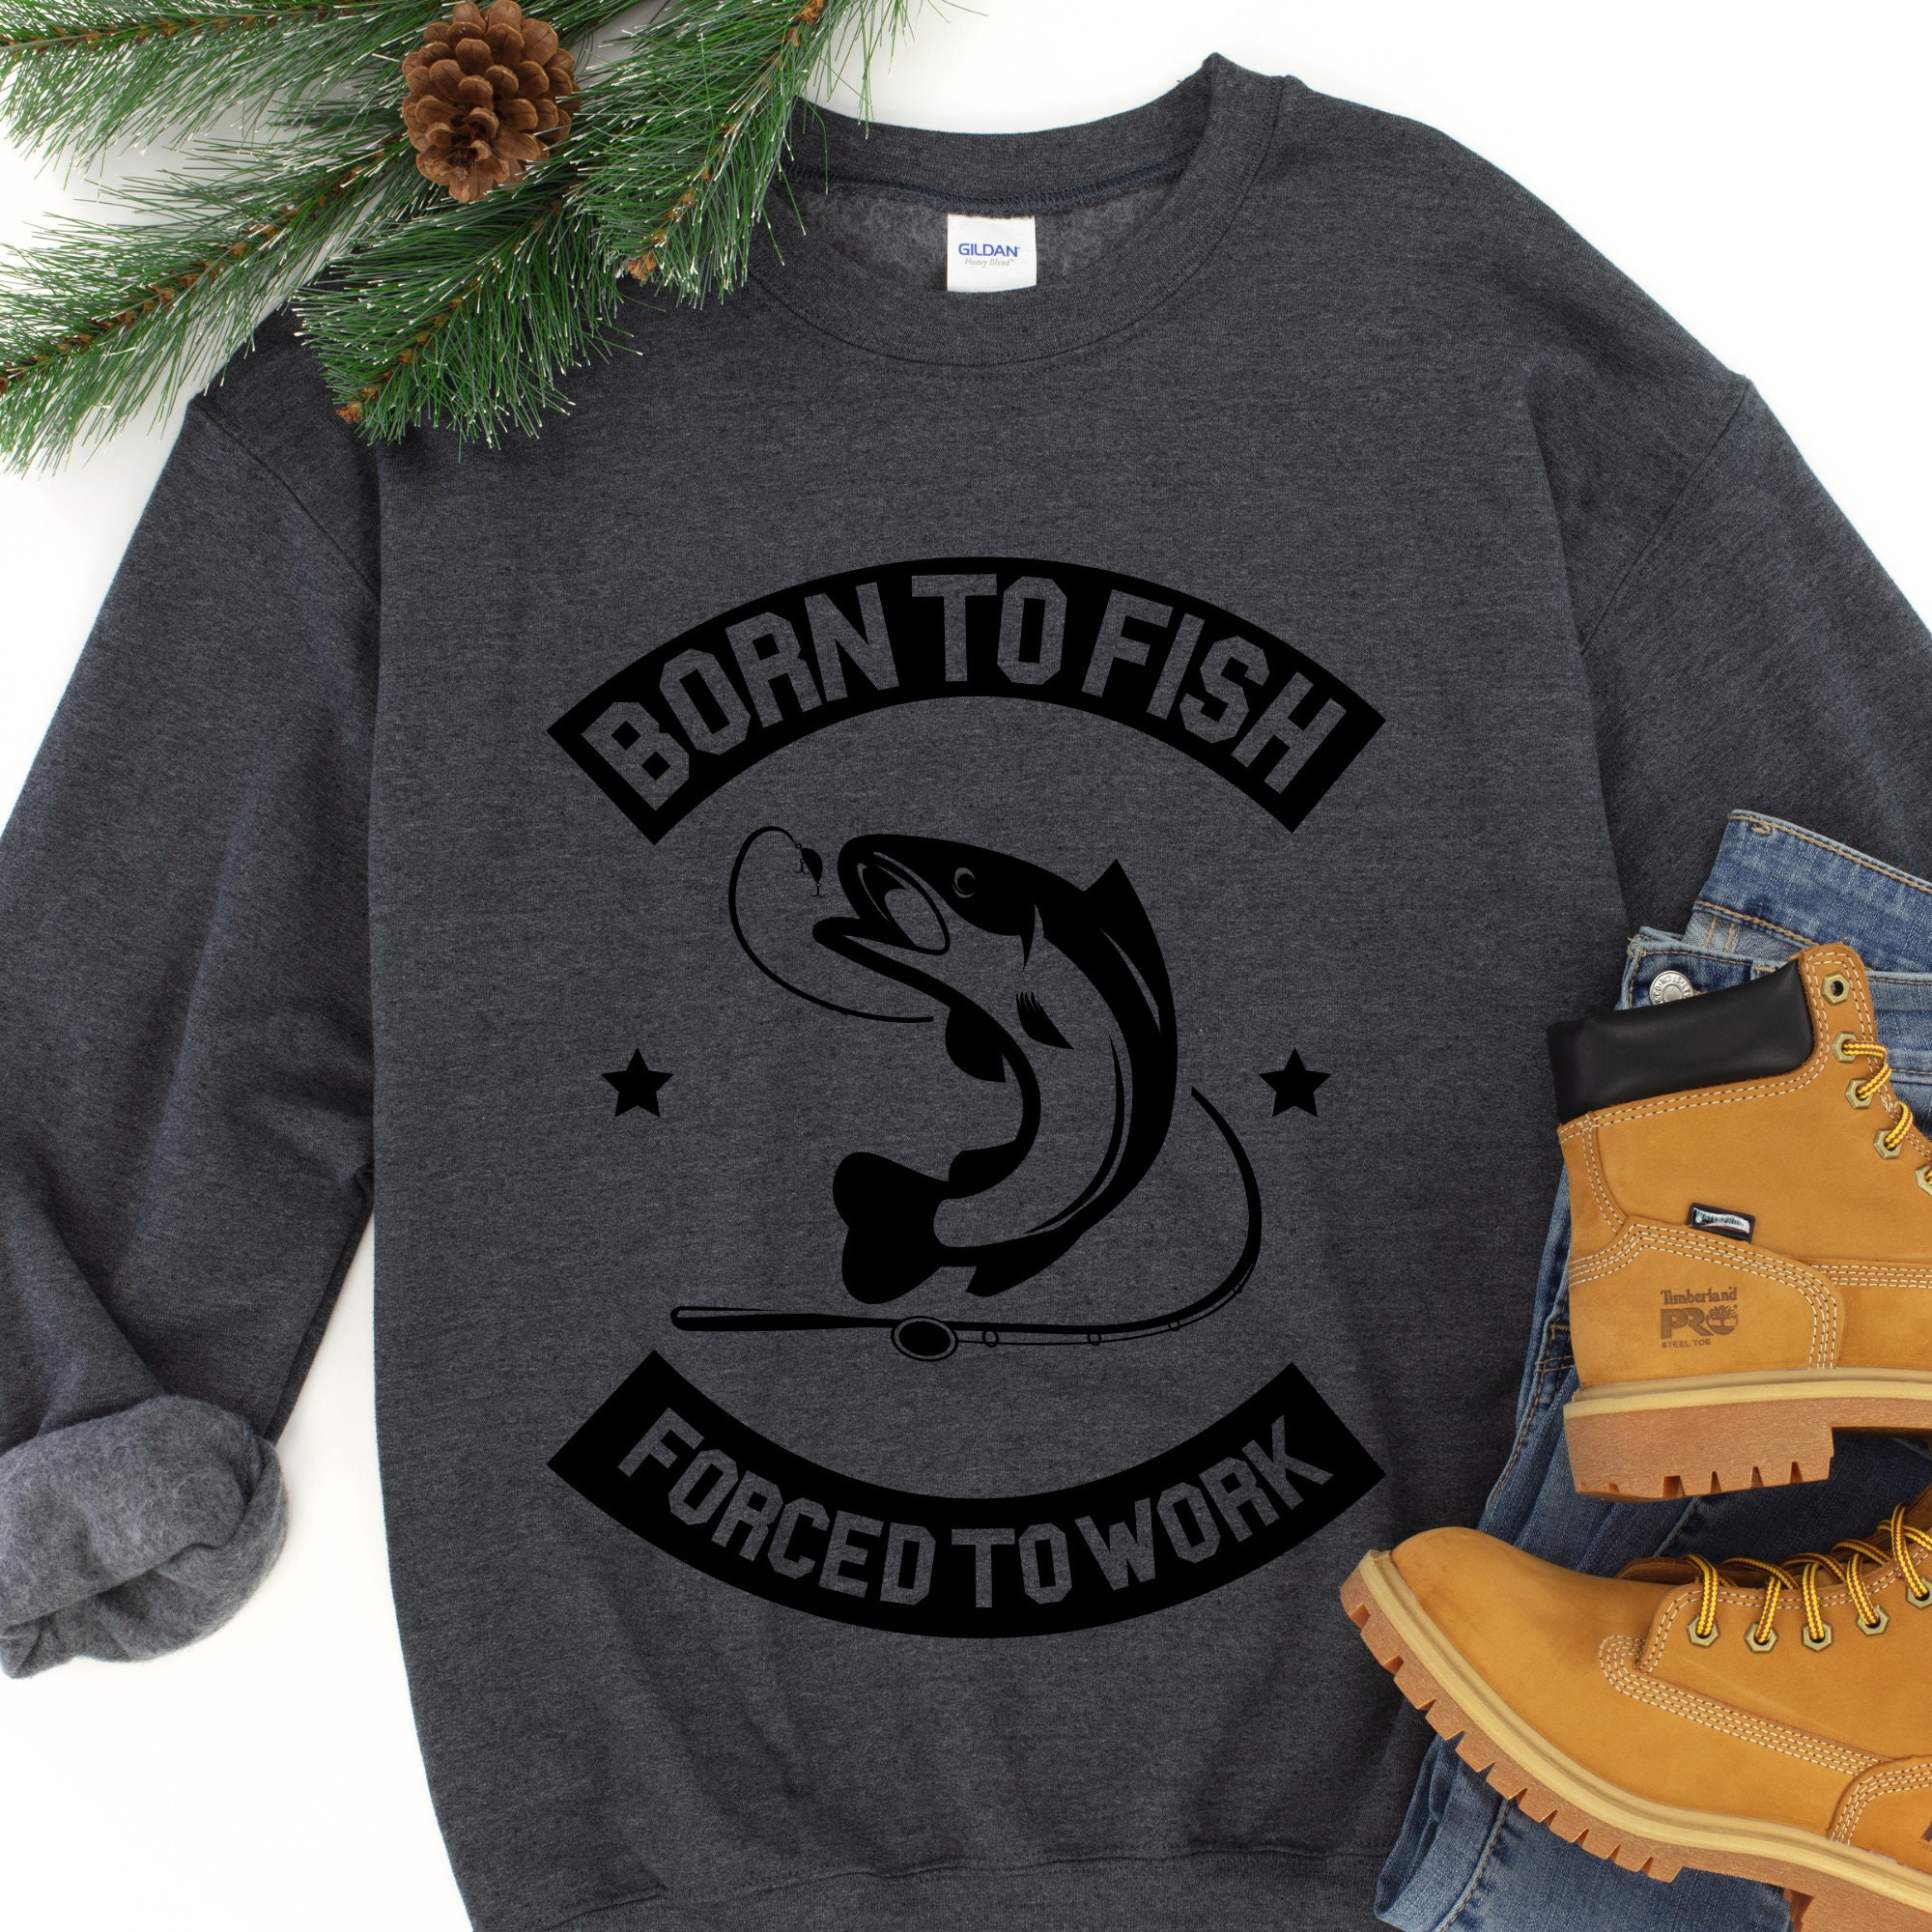 Born to Fish Forced to Work T-shirt, Fishing Shirt ,fishing Gifts